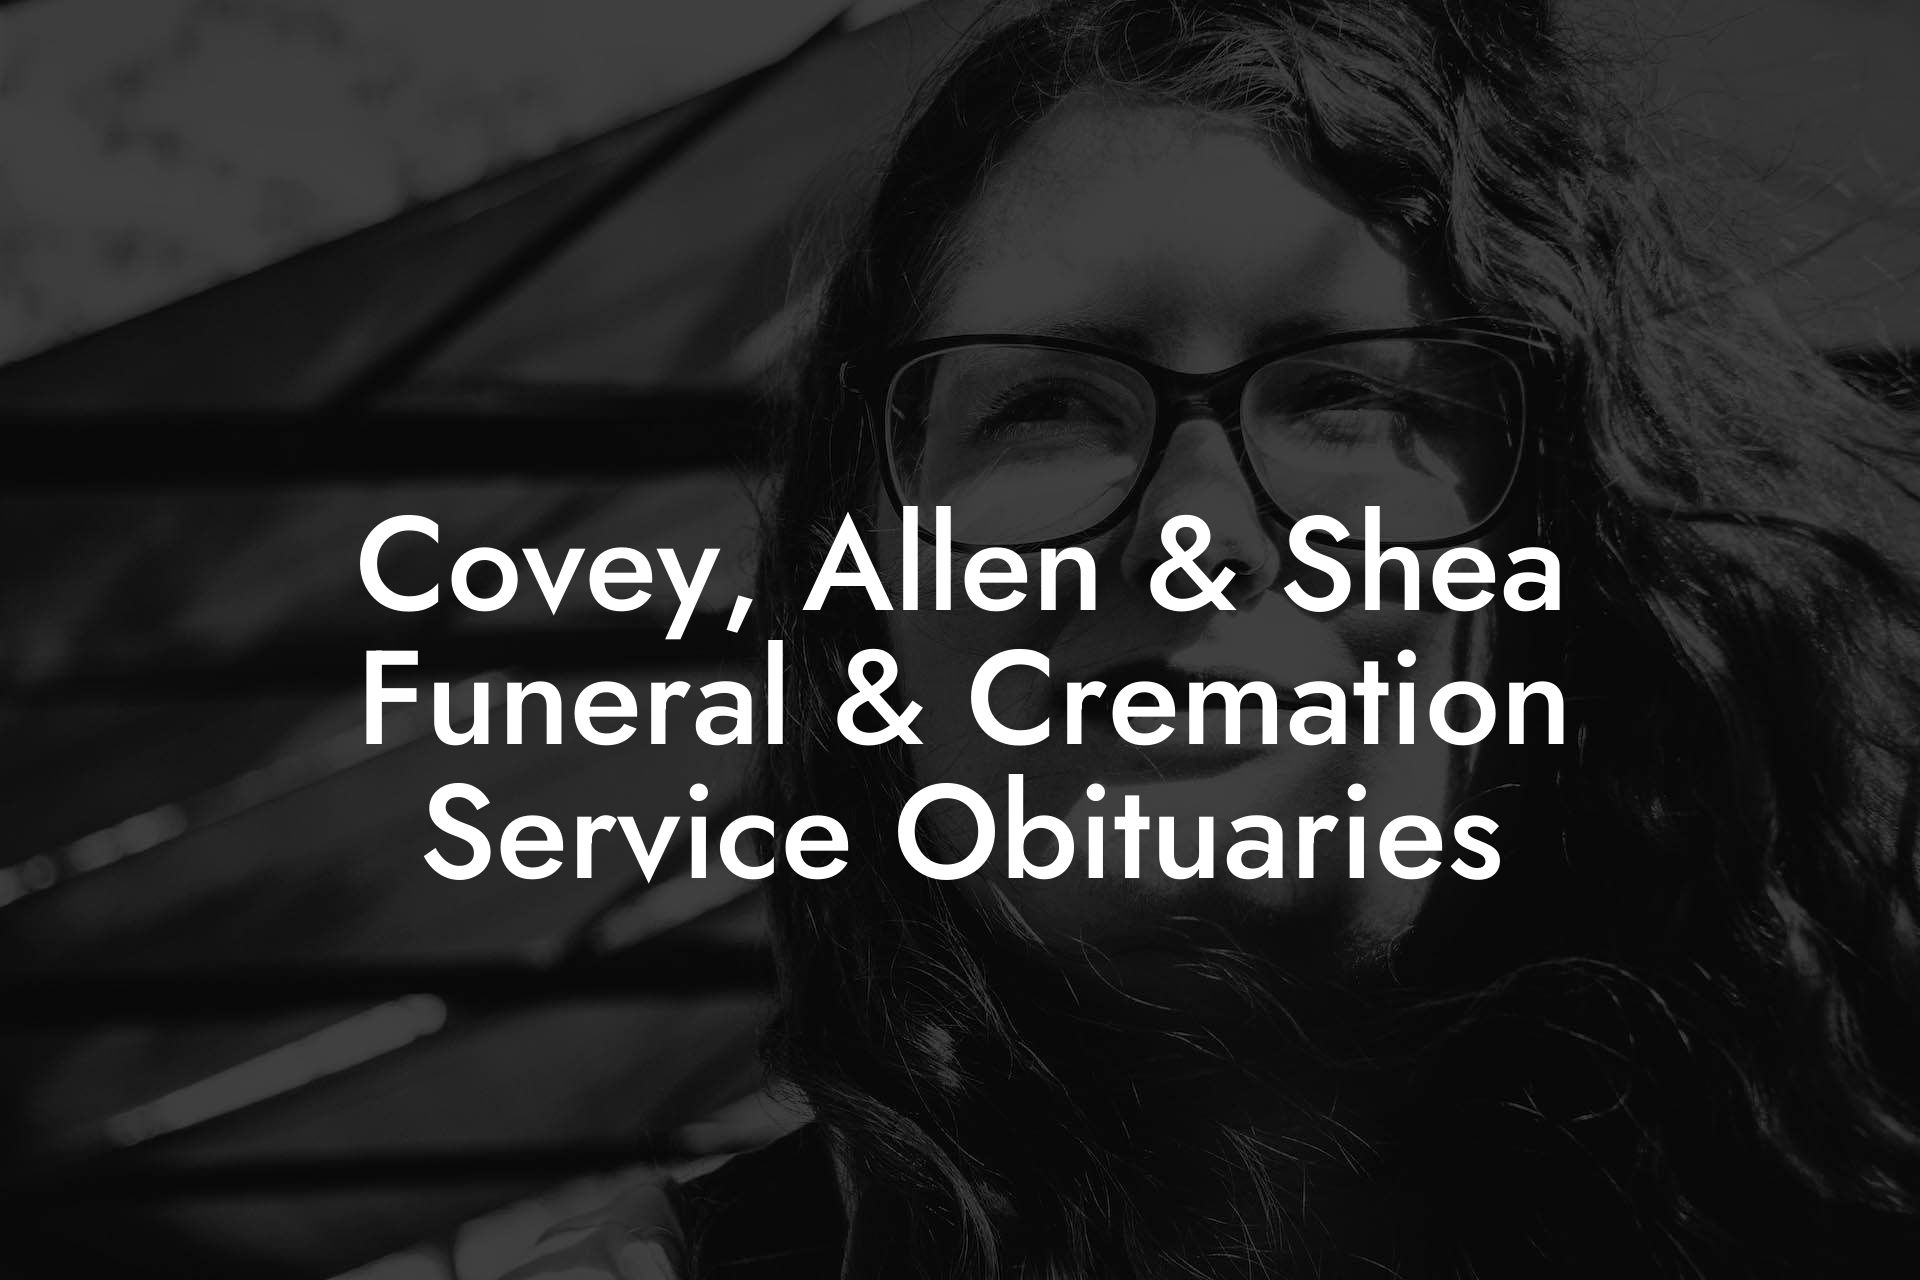 Covey, Allen & Shea Funeral & Cremation Service Obituaries